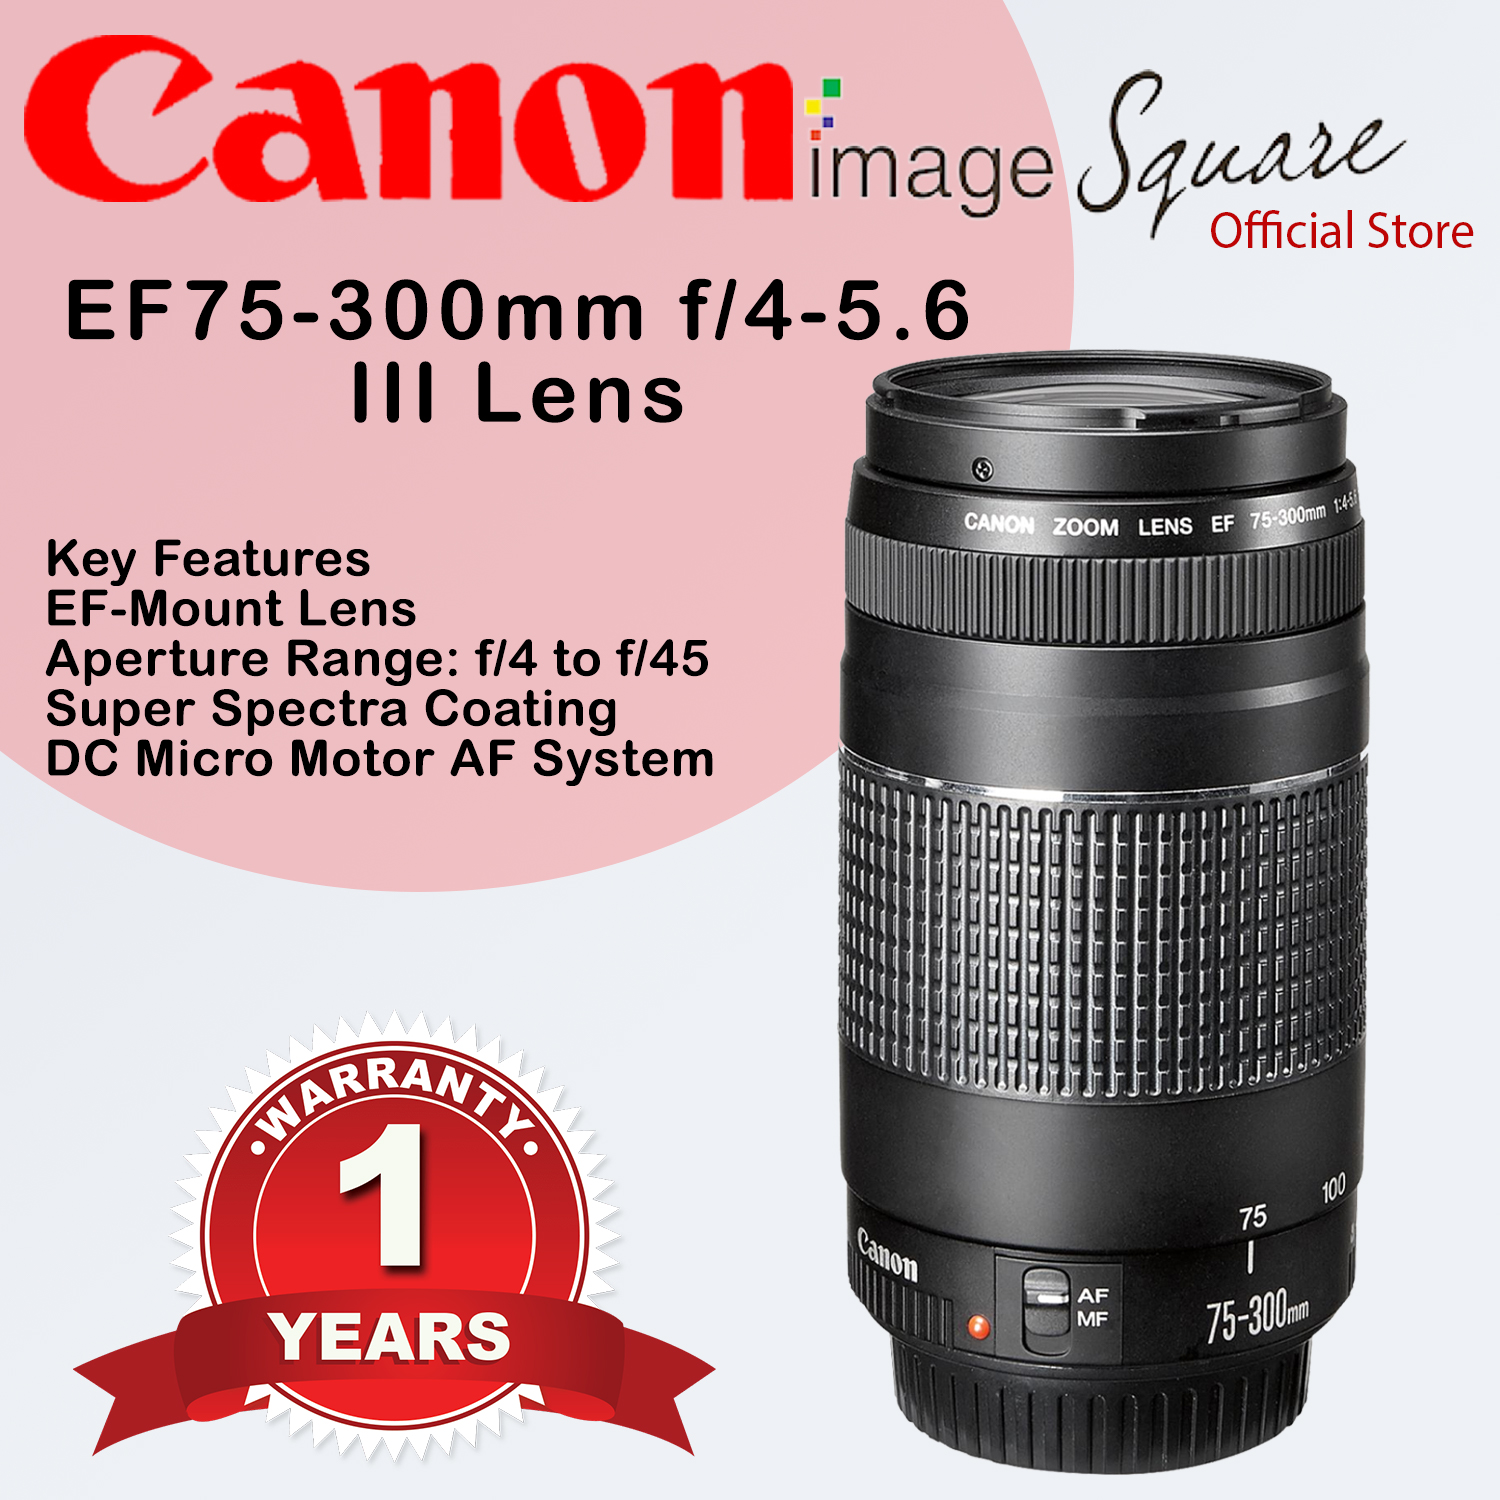 Canon EF 75-300mm f/4-5.6 III Lens 100% Original CANON Warranty